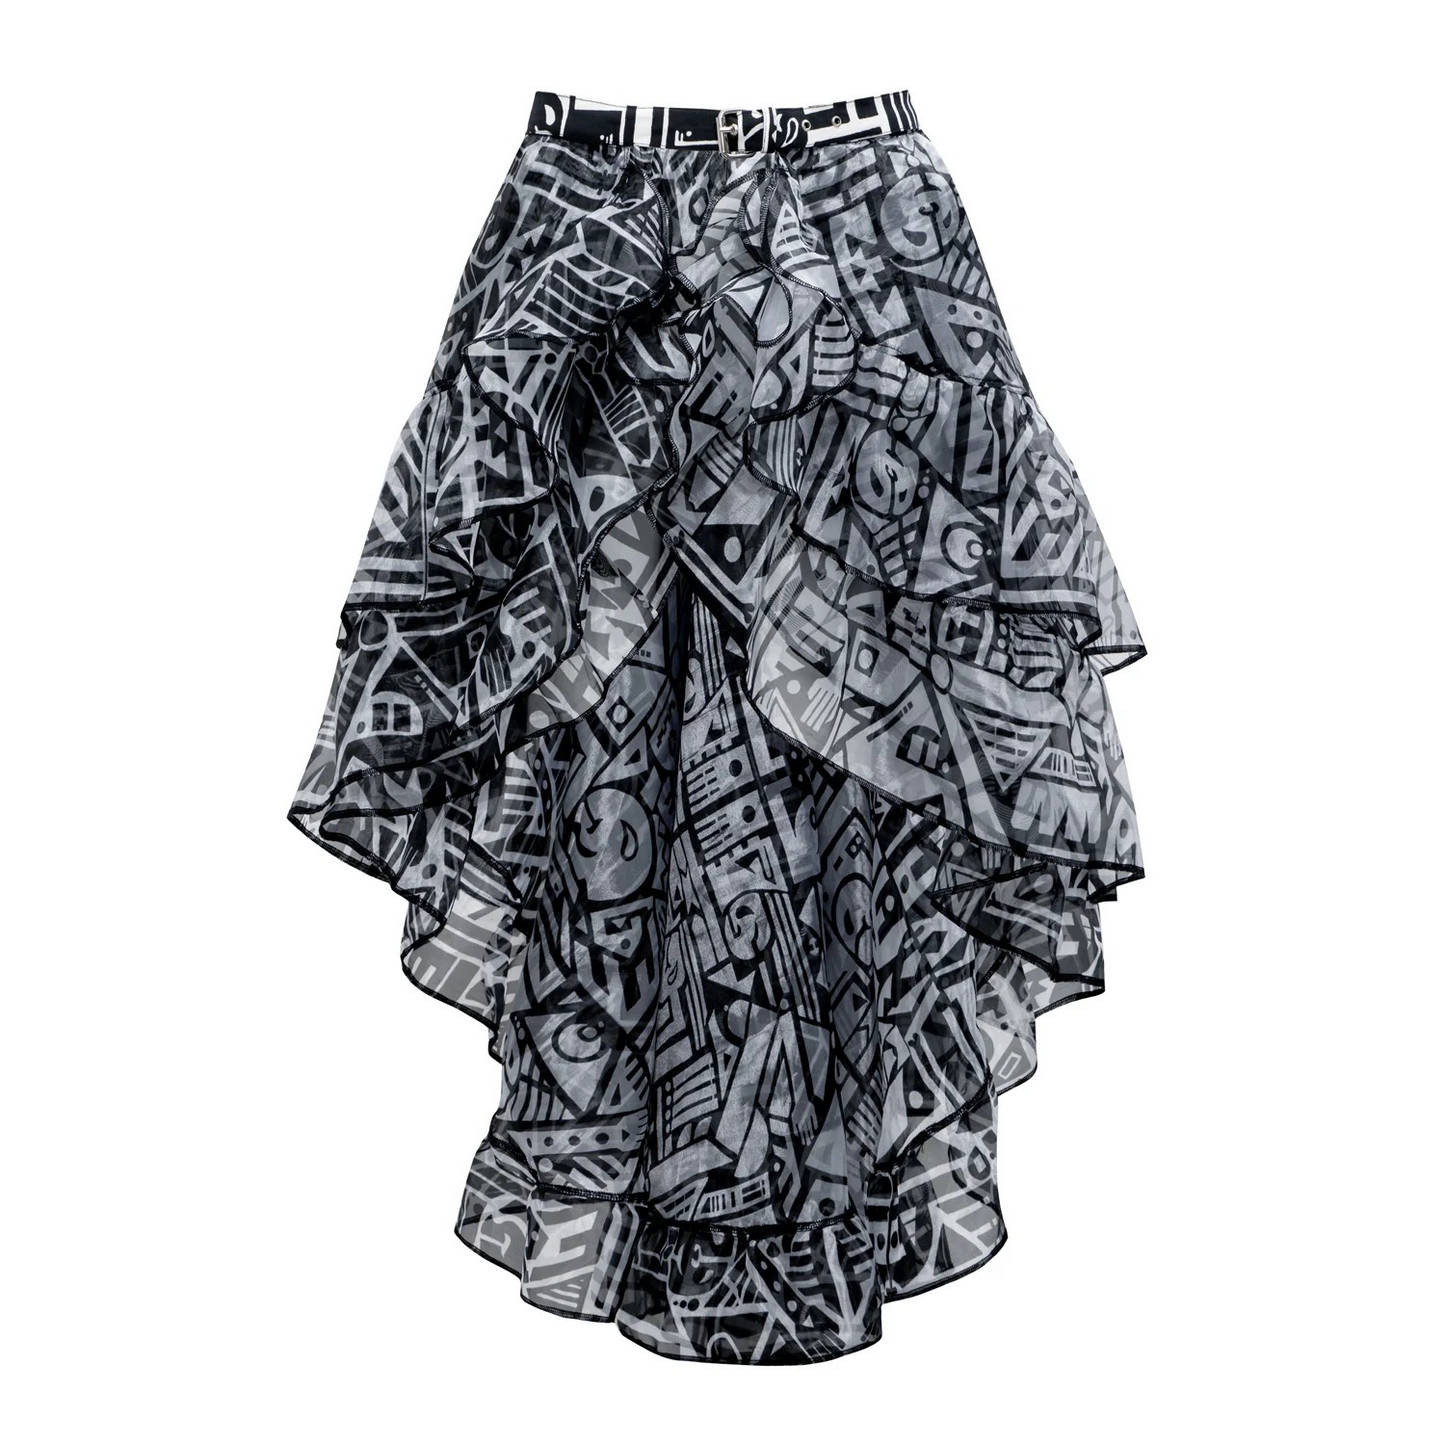 B&W Jackalopeland X BAM-BAM Party Skirt